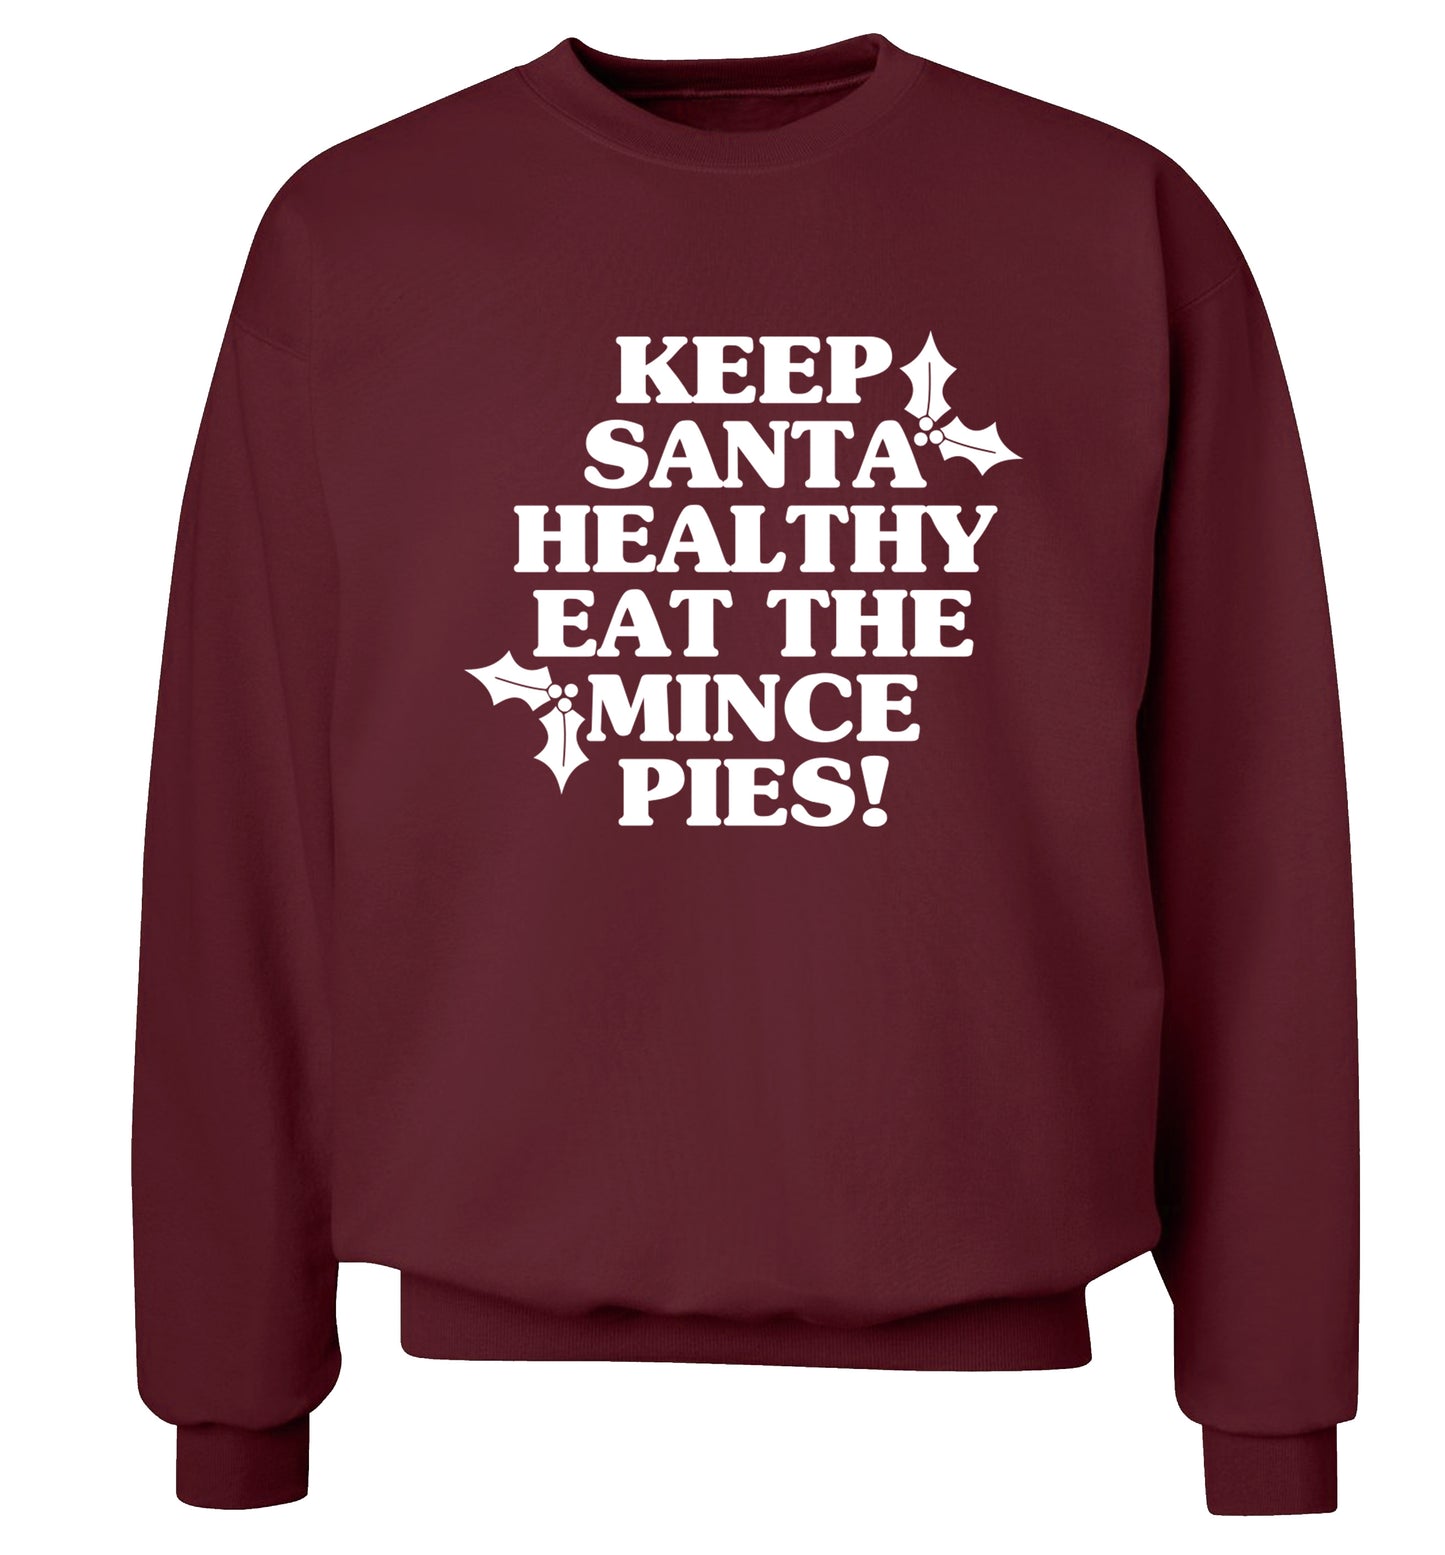 Keep santa healthy eat the mince pies Adult's unisex maroon Sweater 2XL